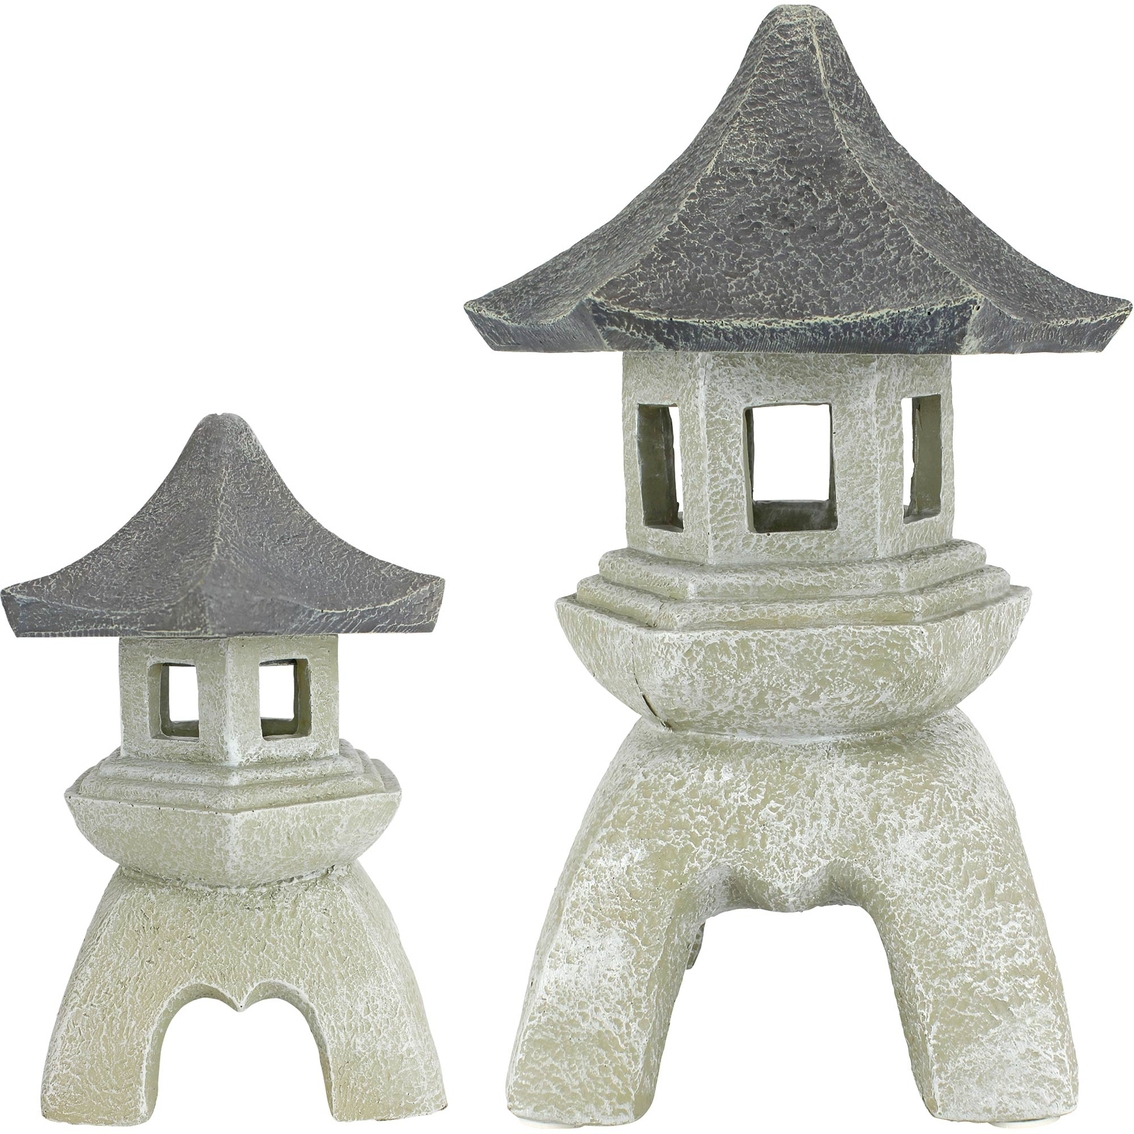 Design Toscano Pagoda Lantern Sculptures, Set of 2 - Image 3 of 4